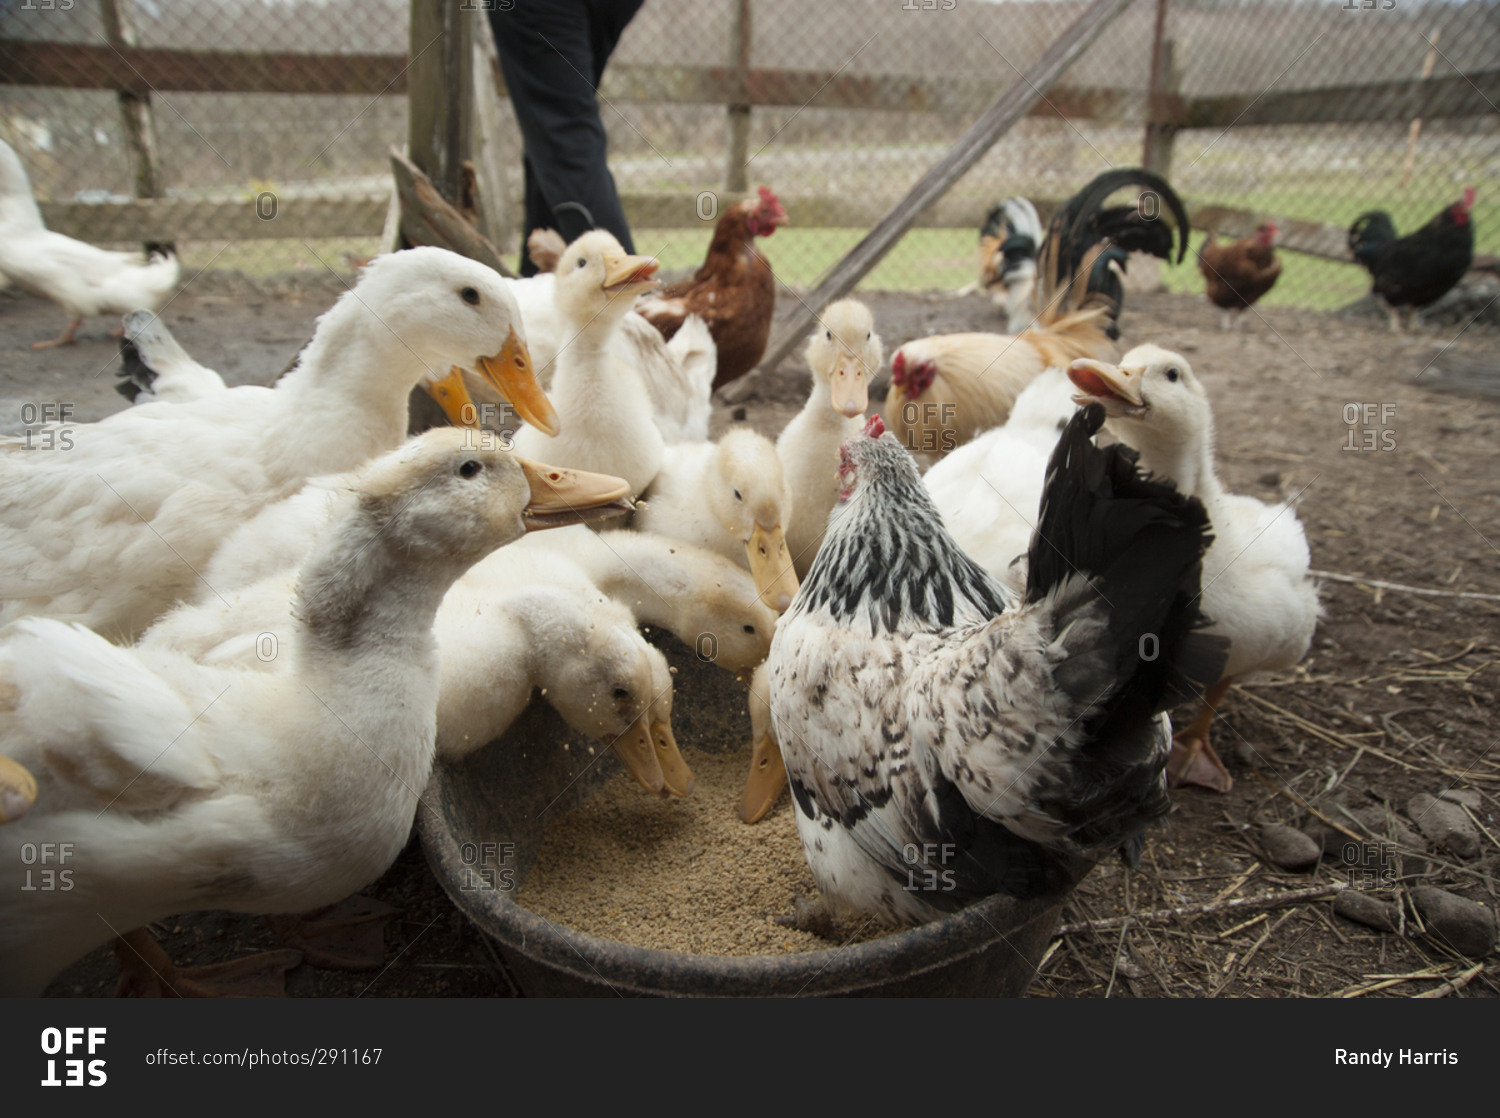 Feeding ducks and chickens